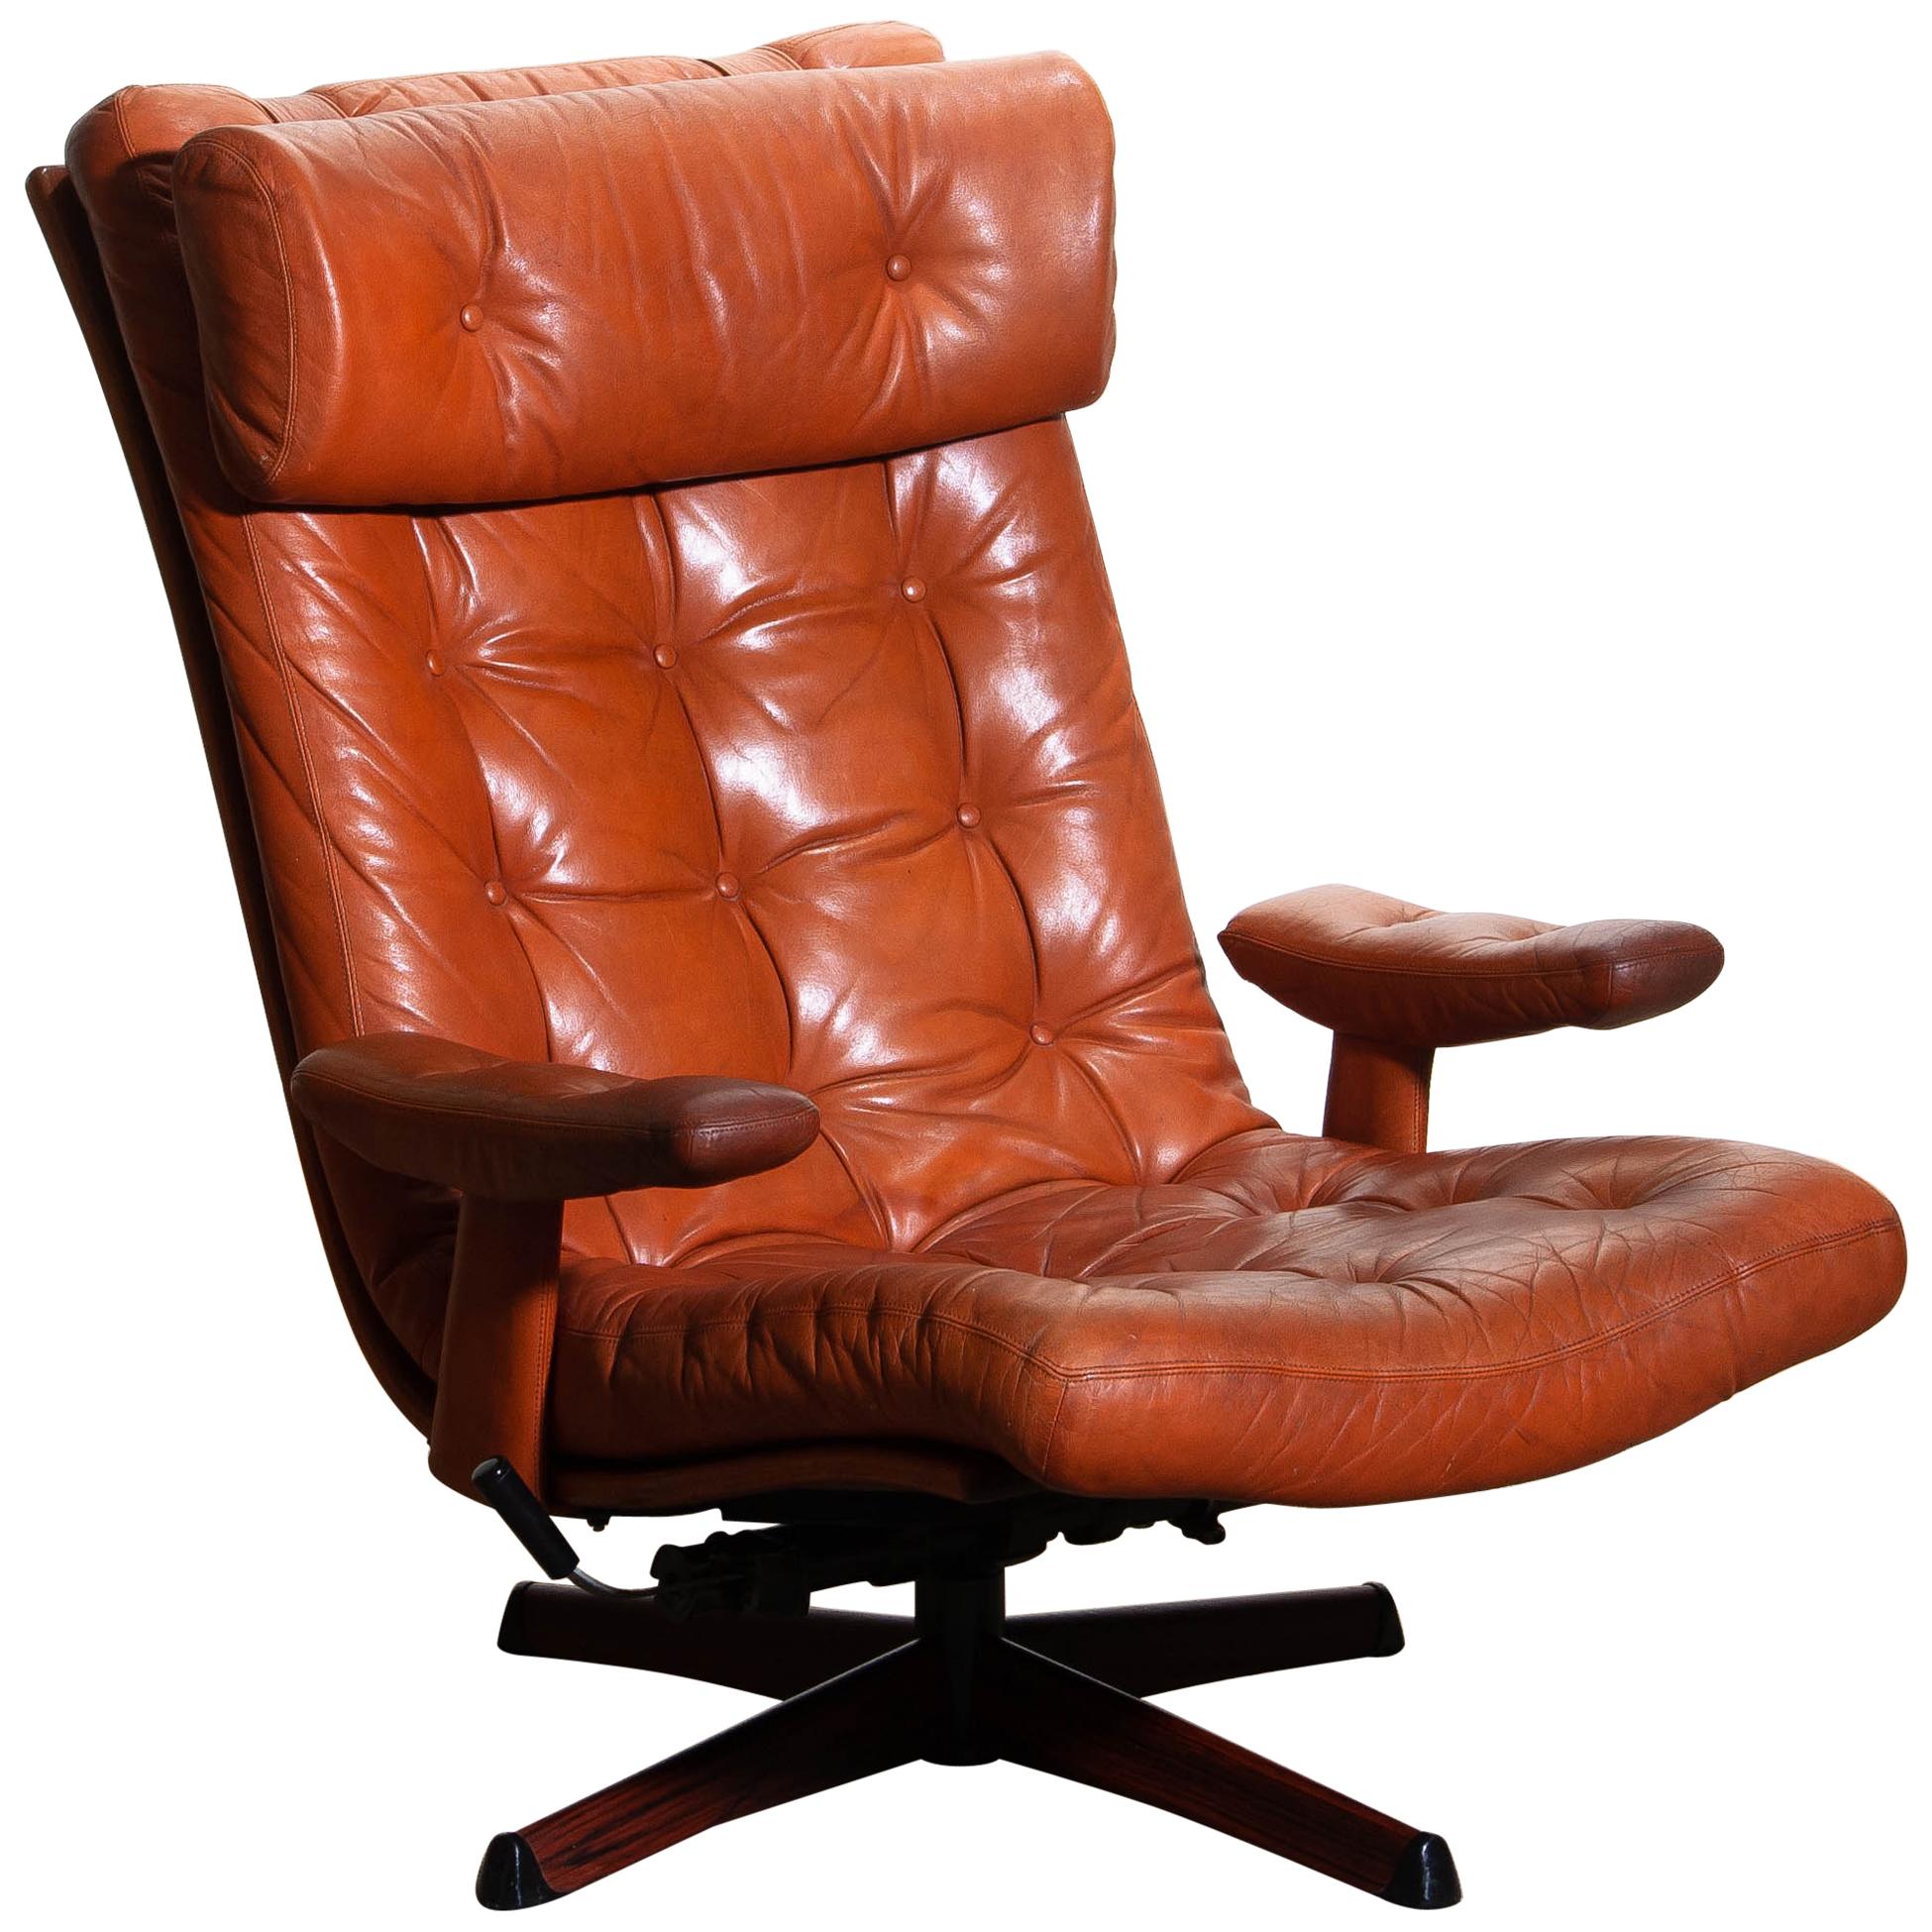 1960s, Cognac Leather Swivel / Relax Lounge Easy Chair by Göte Design Nässjö.